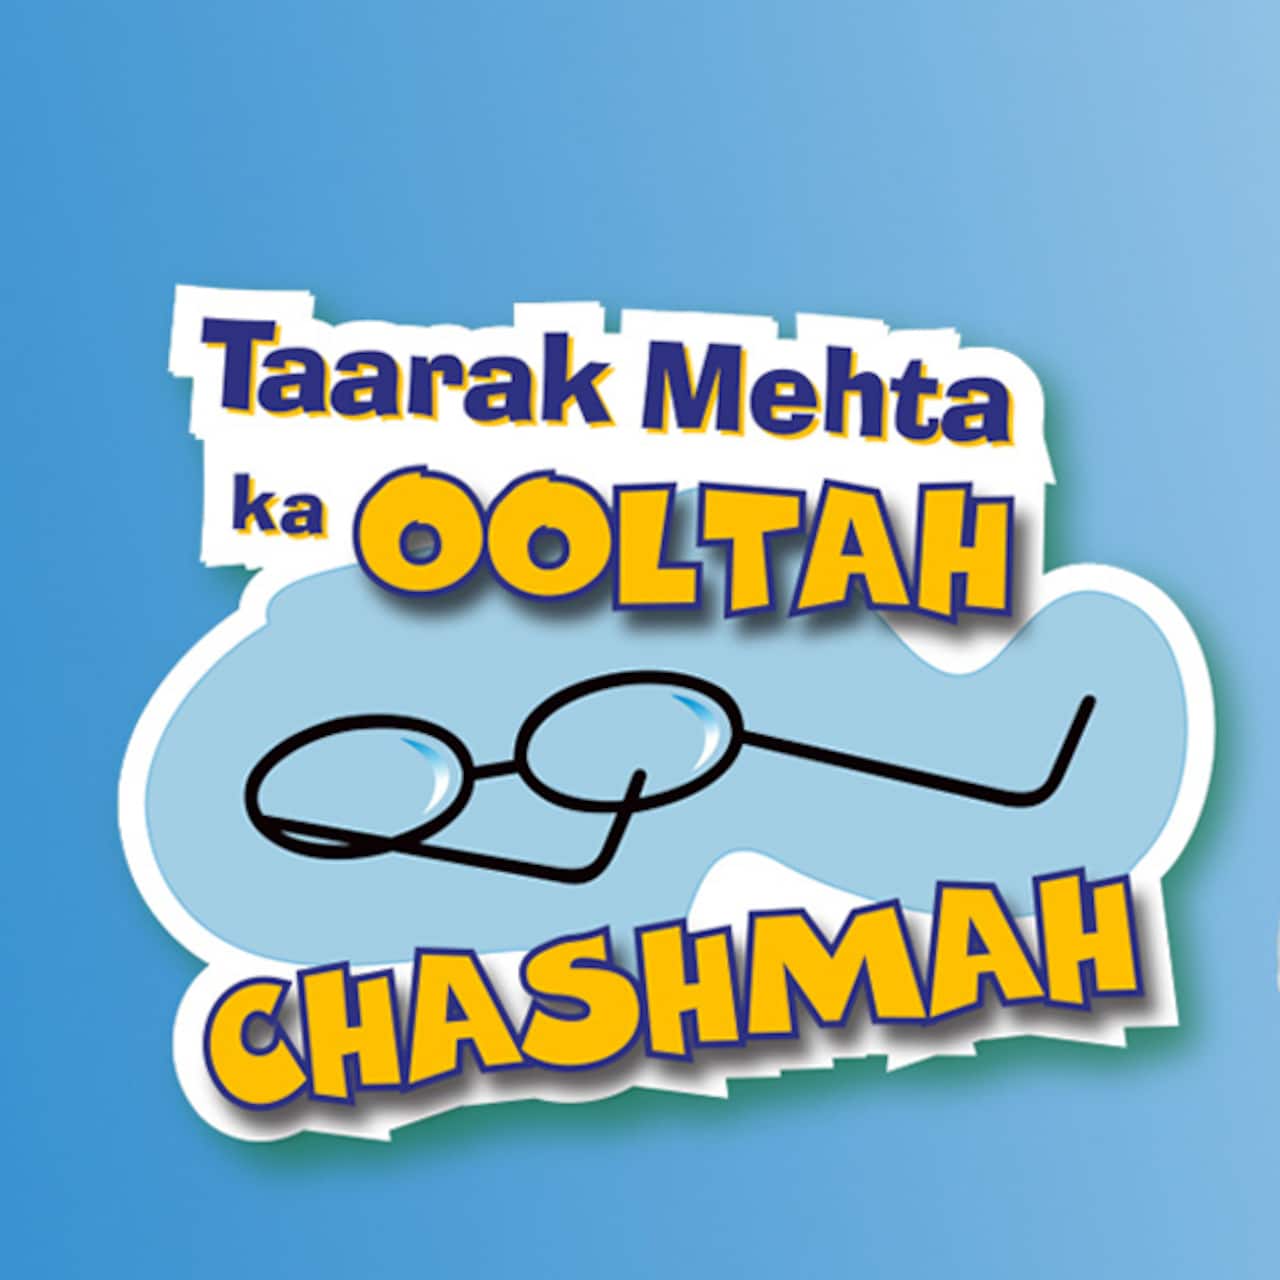 तारक मेहता का उल्टा चश्मा (Taarak Mehta Ka Ooltah Chashmah)